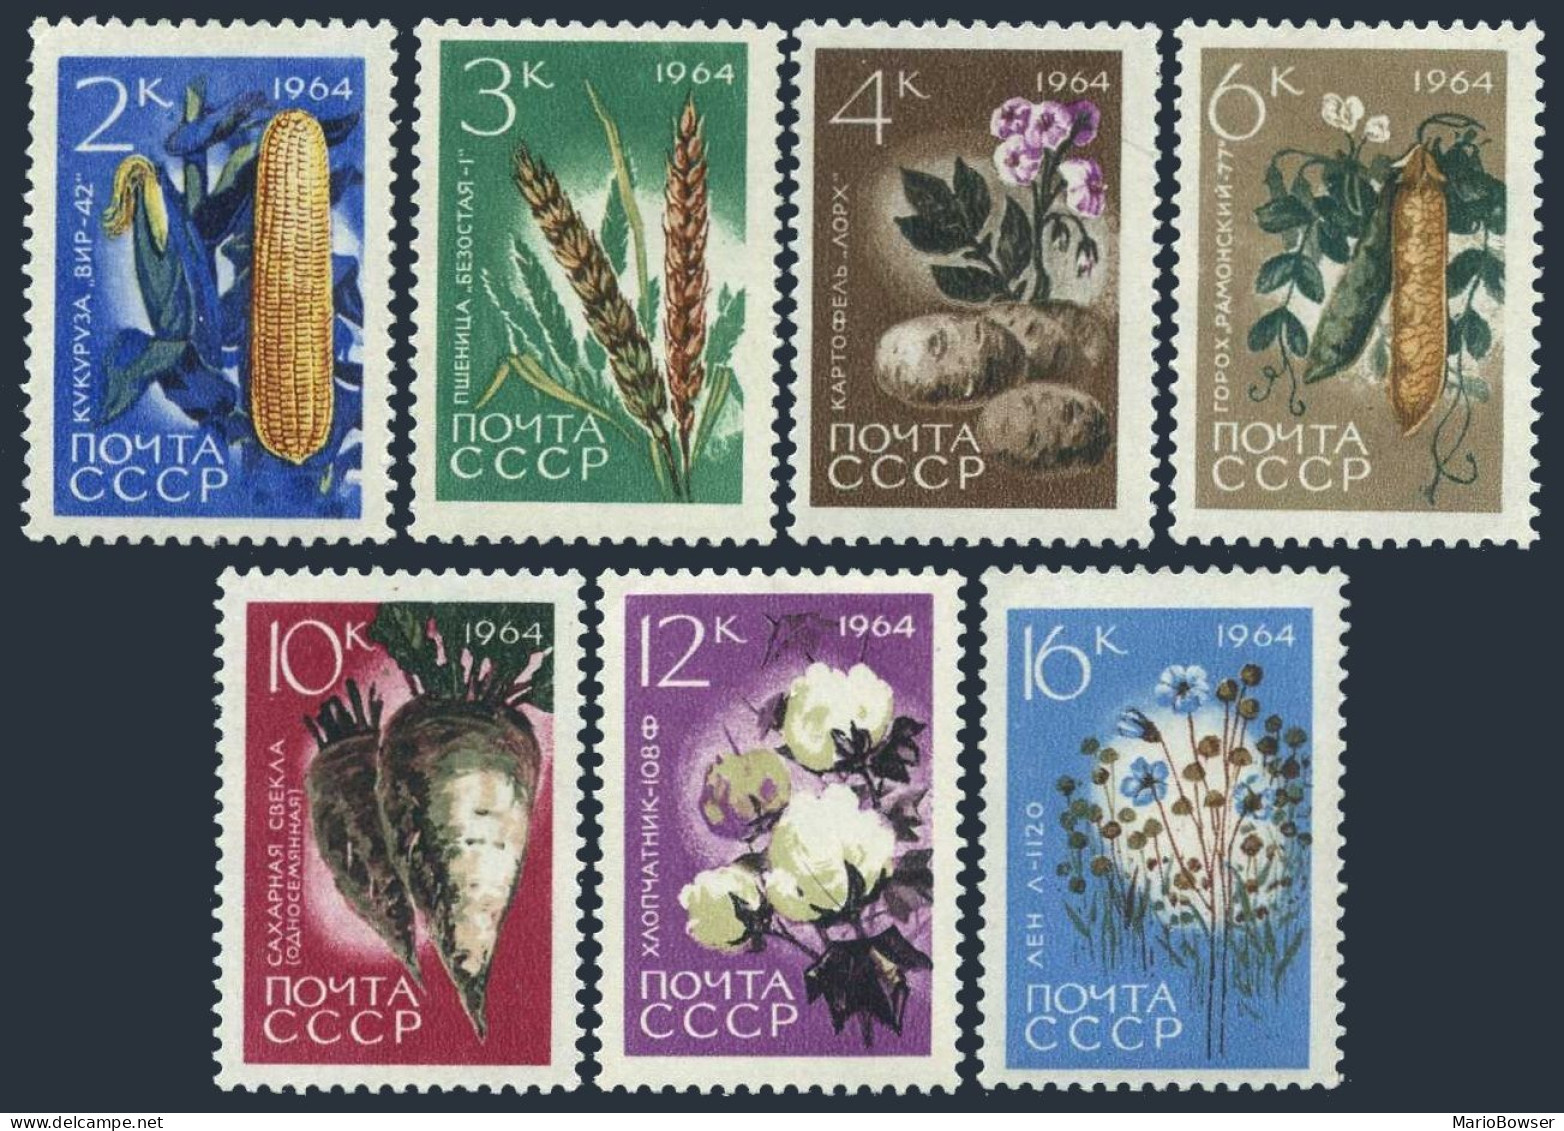 Russia 2913-2919, MNH. Mi 2922-2928A. Agricultural Plants, 1964. Corn,Wheat,Bean - Nuevos